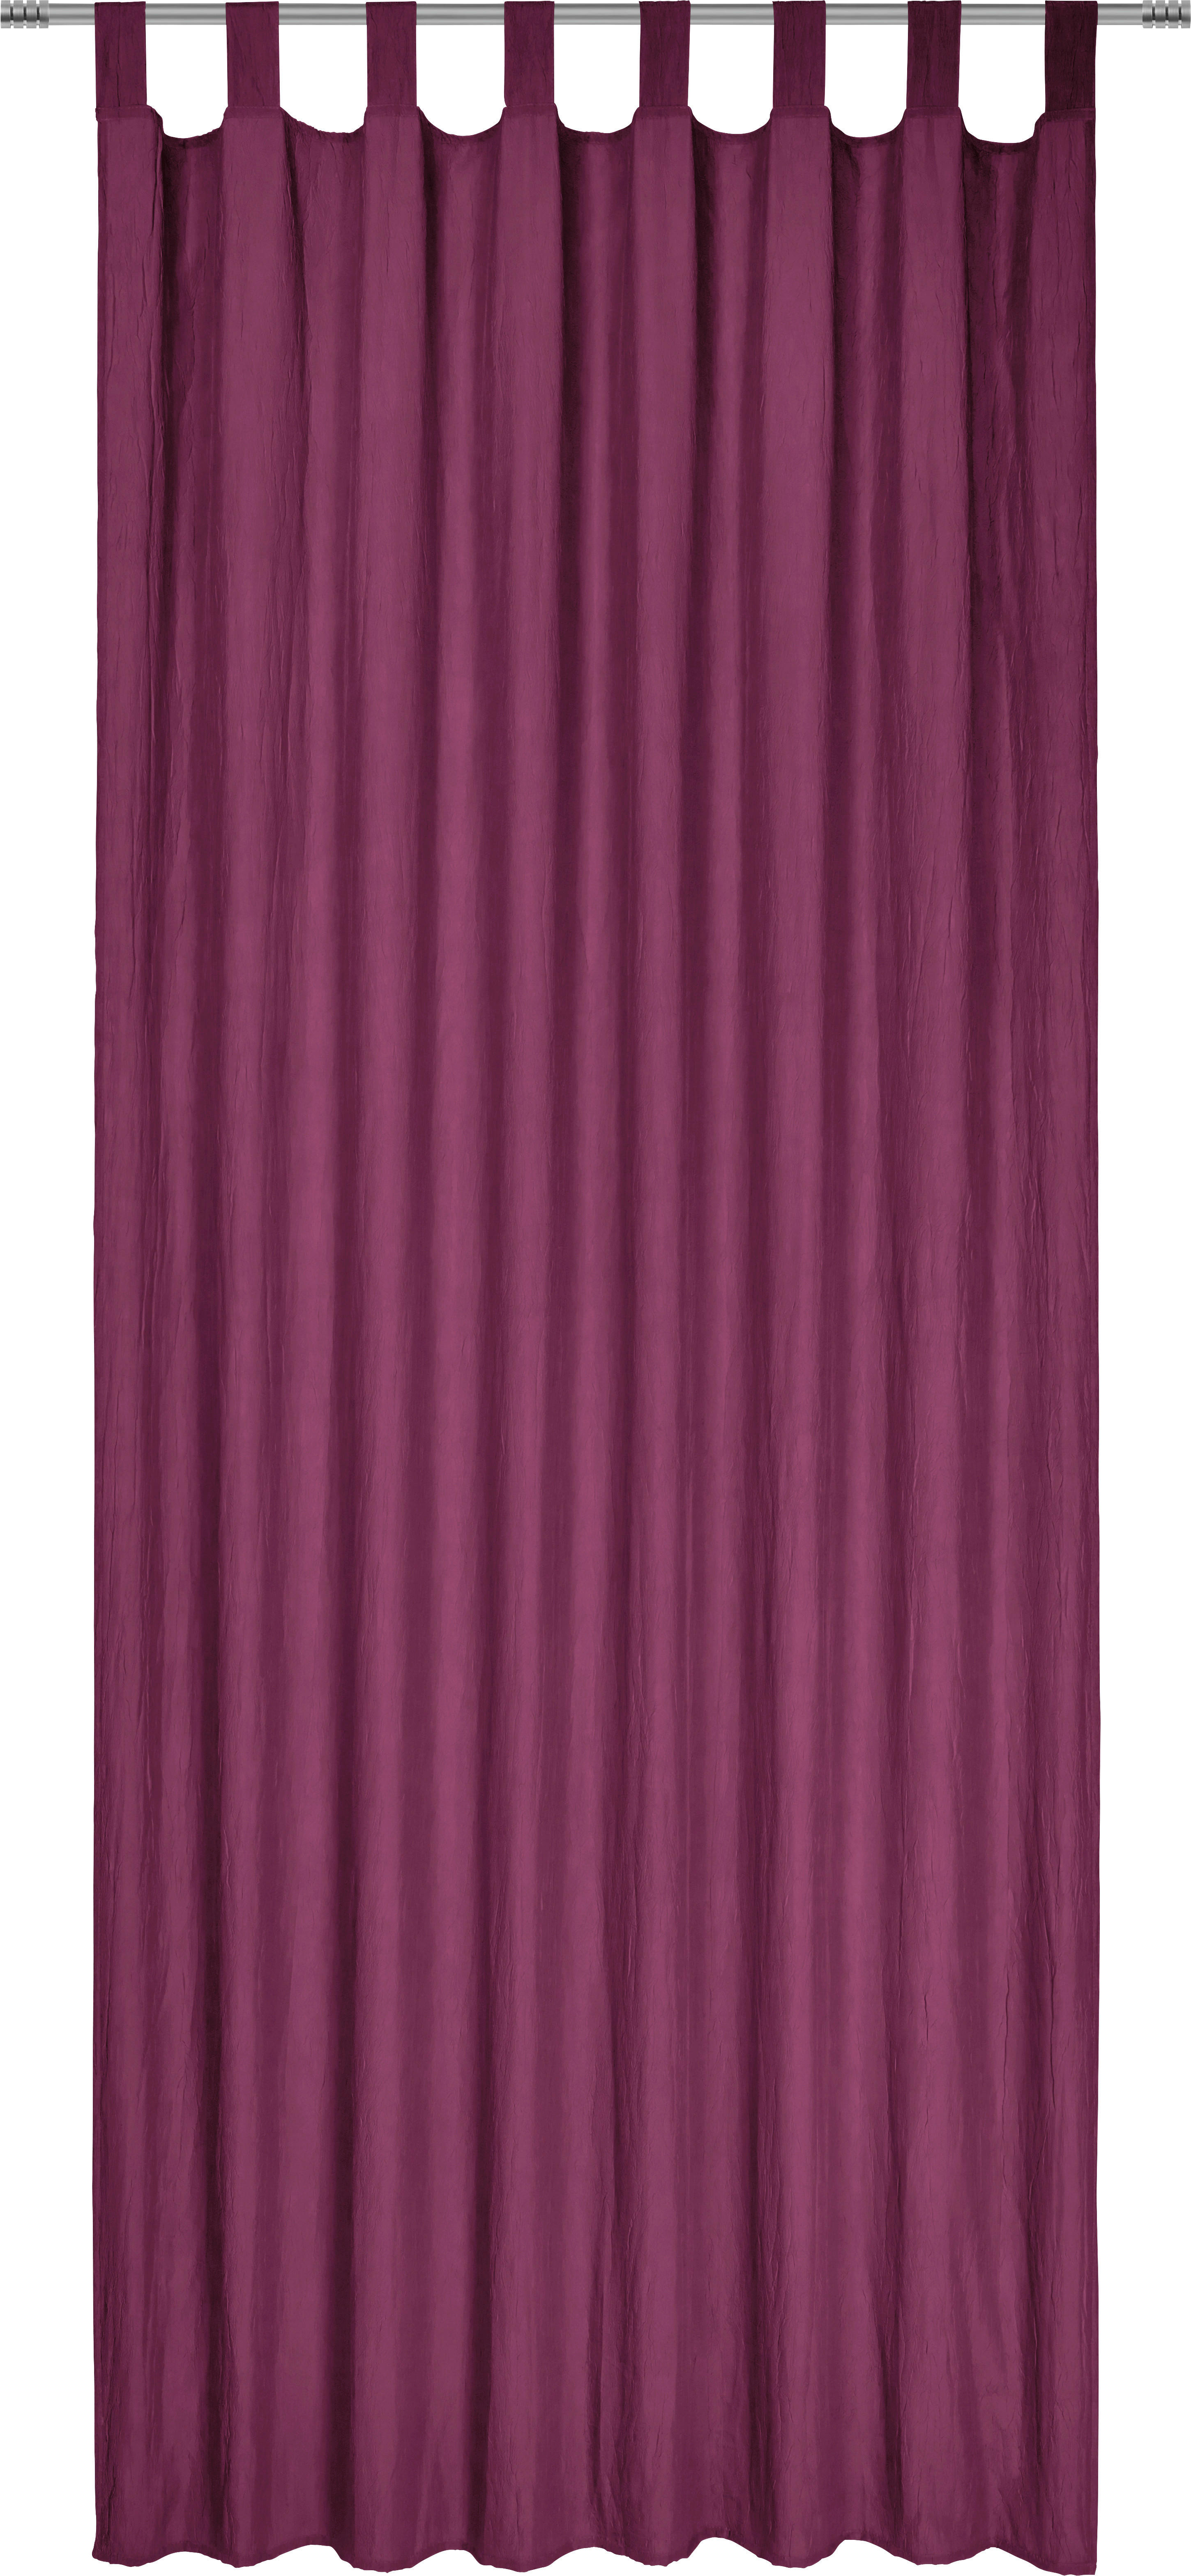 ZAVESA Z ZANKAMI POLO  pol prosojno  135/245 cm   - lila, Konvencionalno, tekstil (135/245cm) - Boxxx